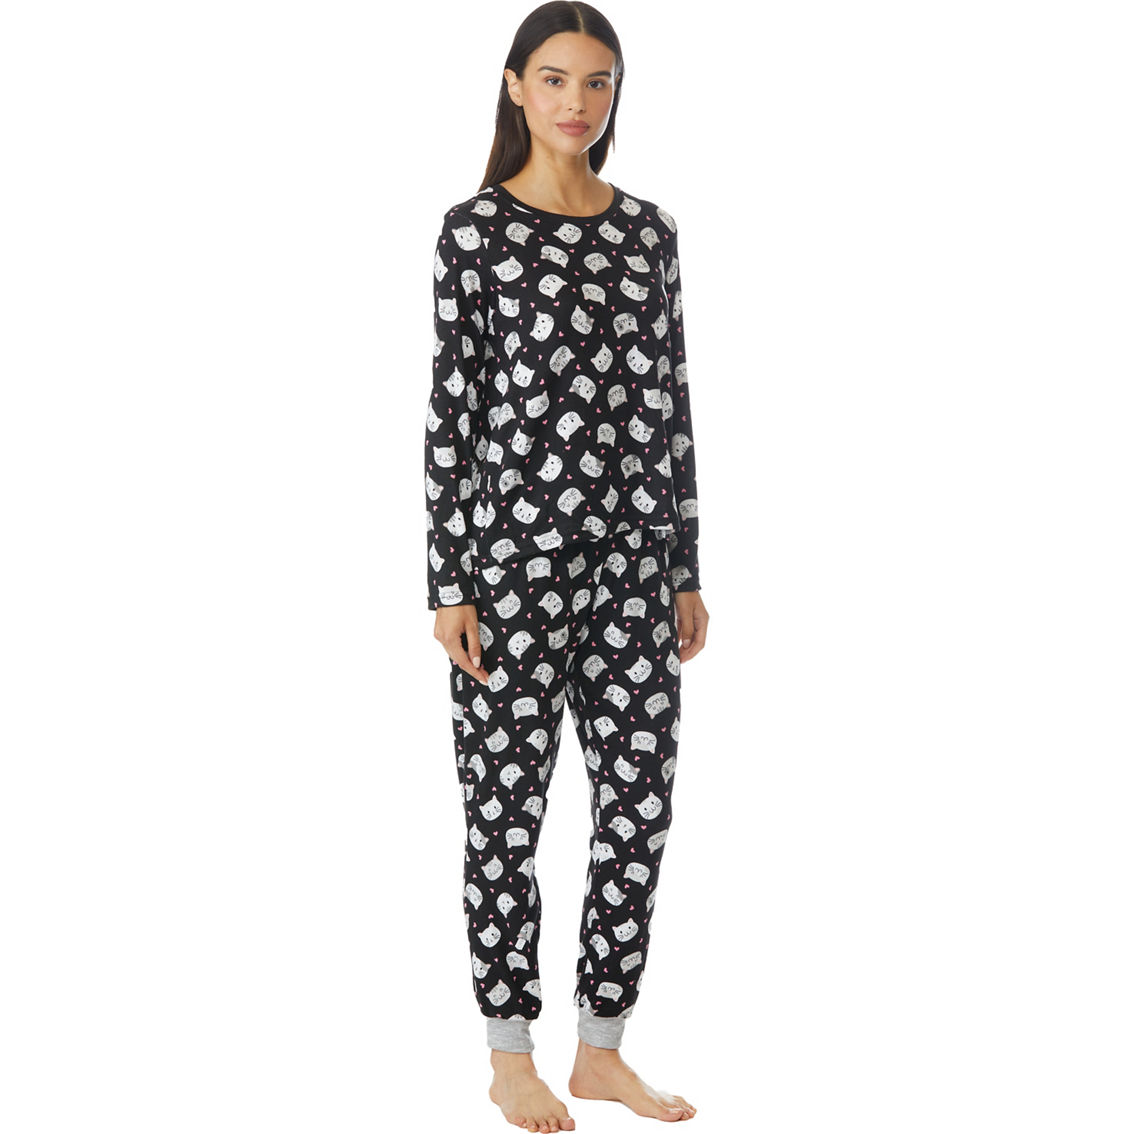 Rene Rofe Wake Me Up Top And Joggers 2 Pc. Pajama Set | Pajamas & Robes ...